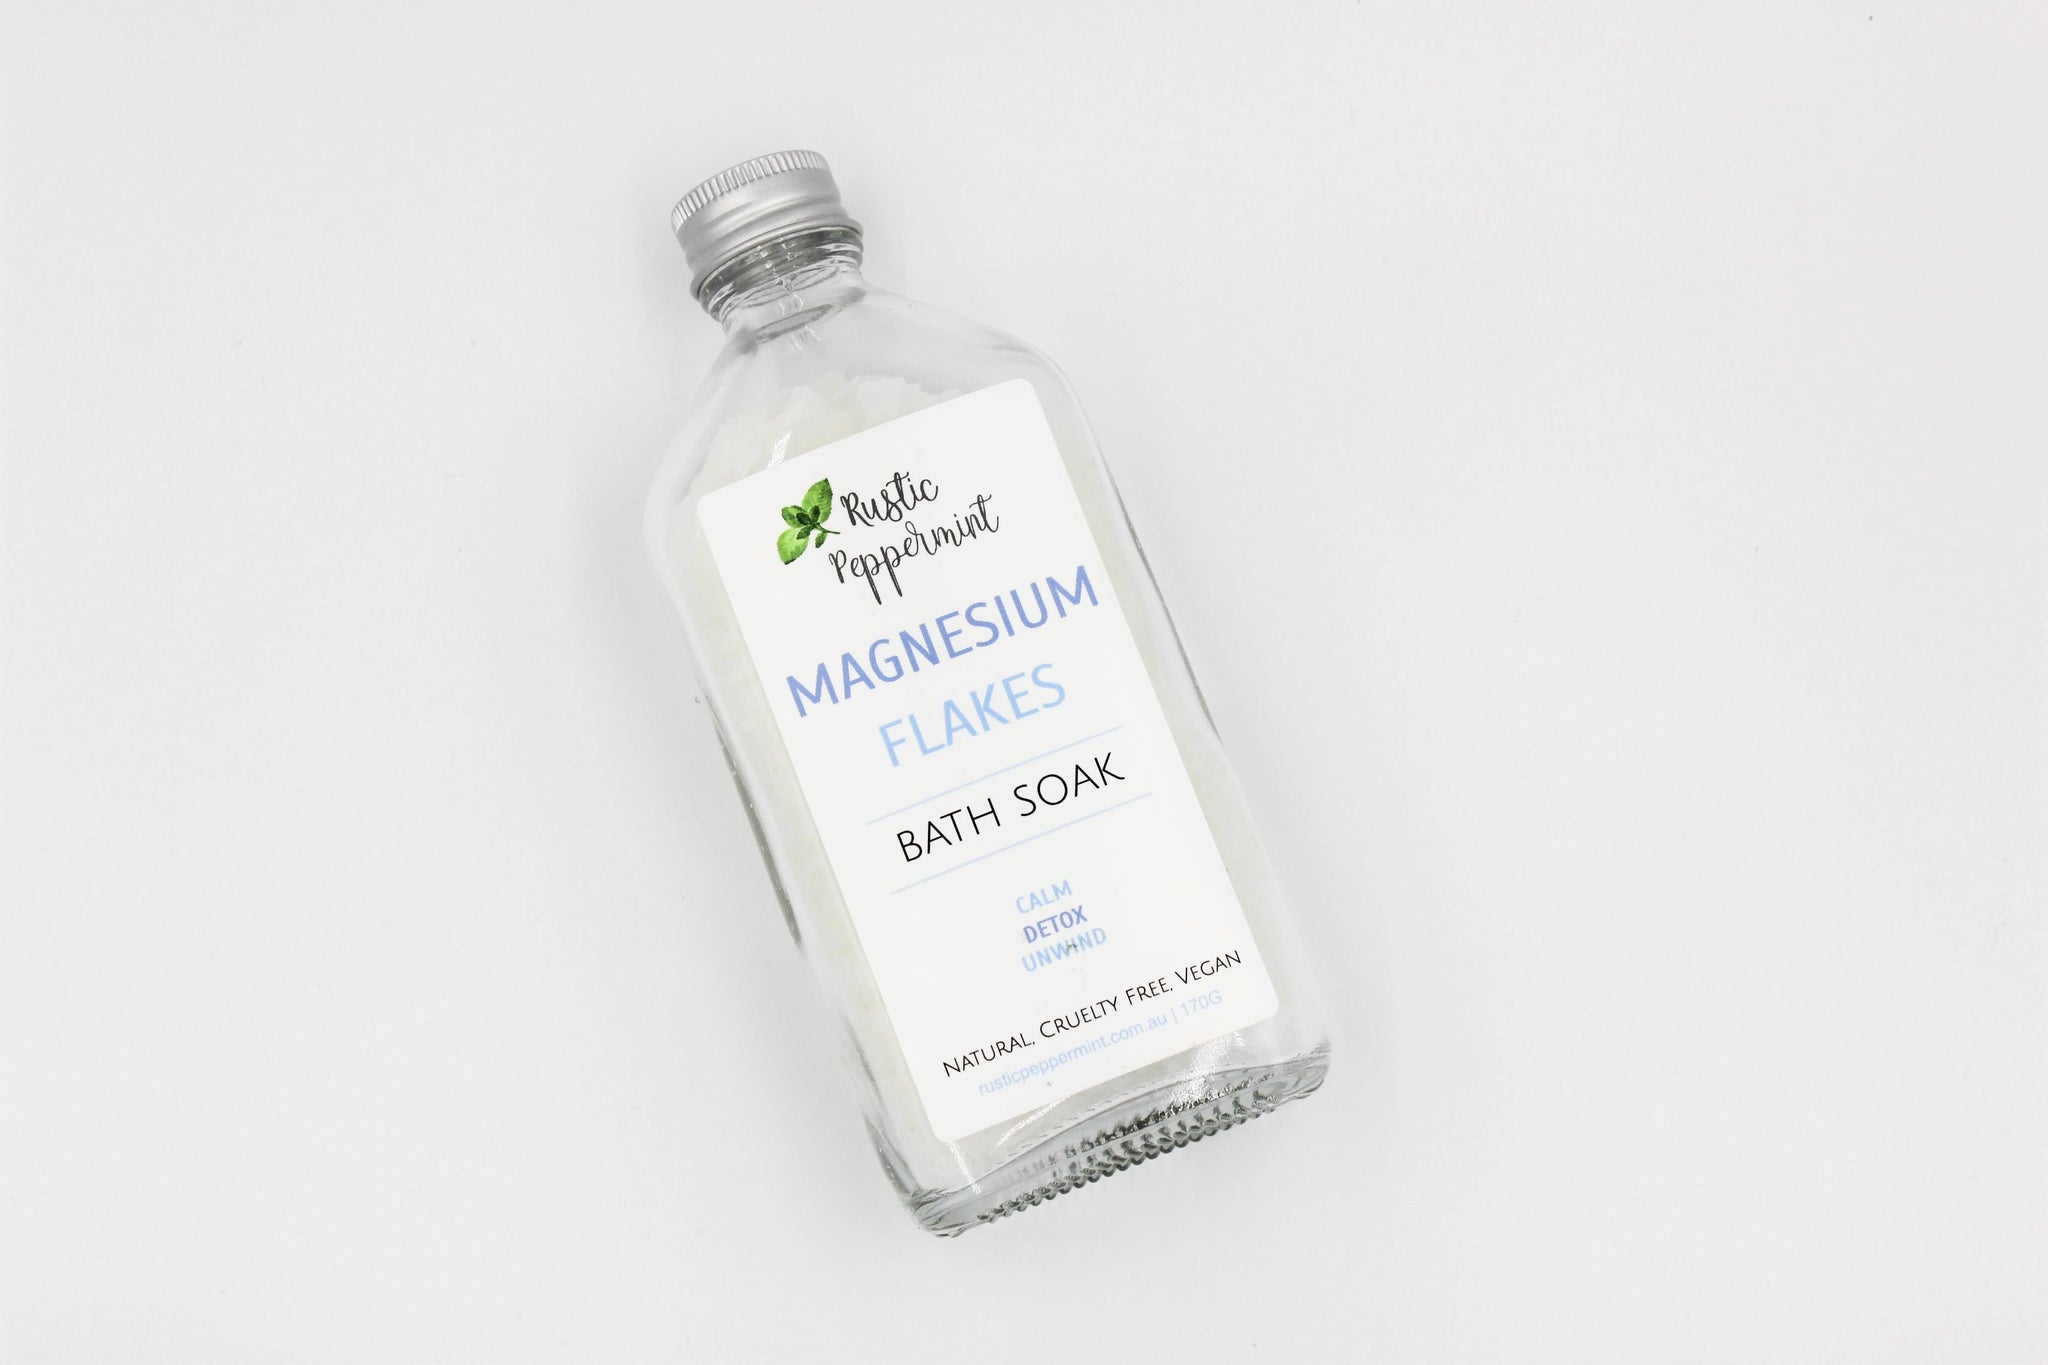 Magnesium Flakes Bath Soak